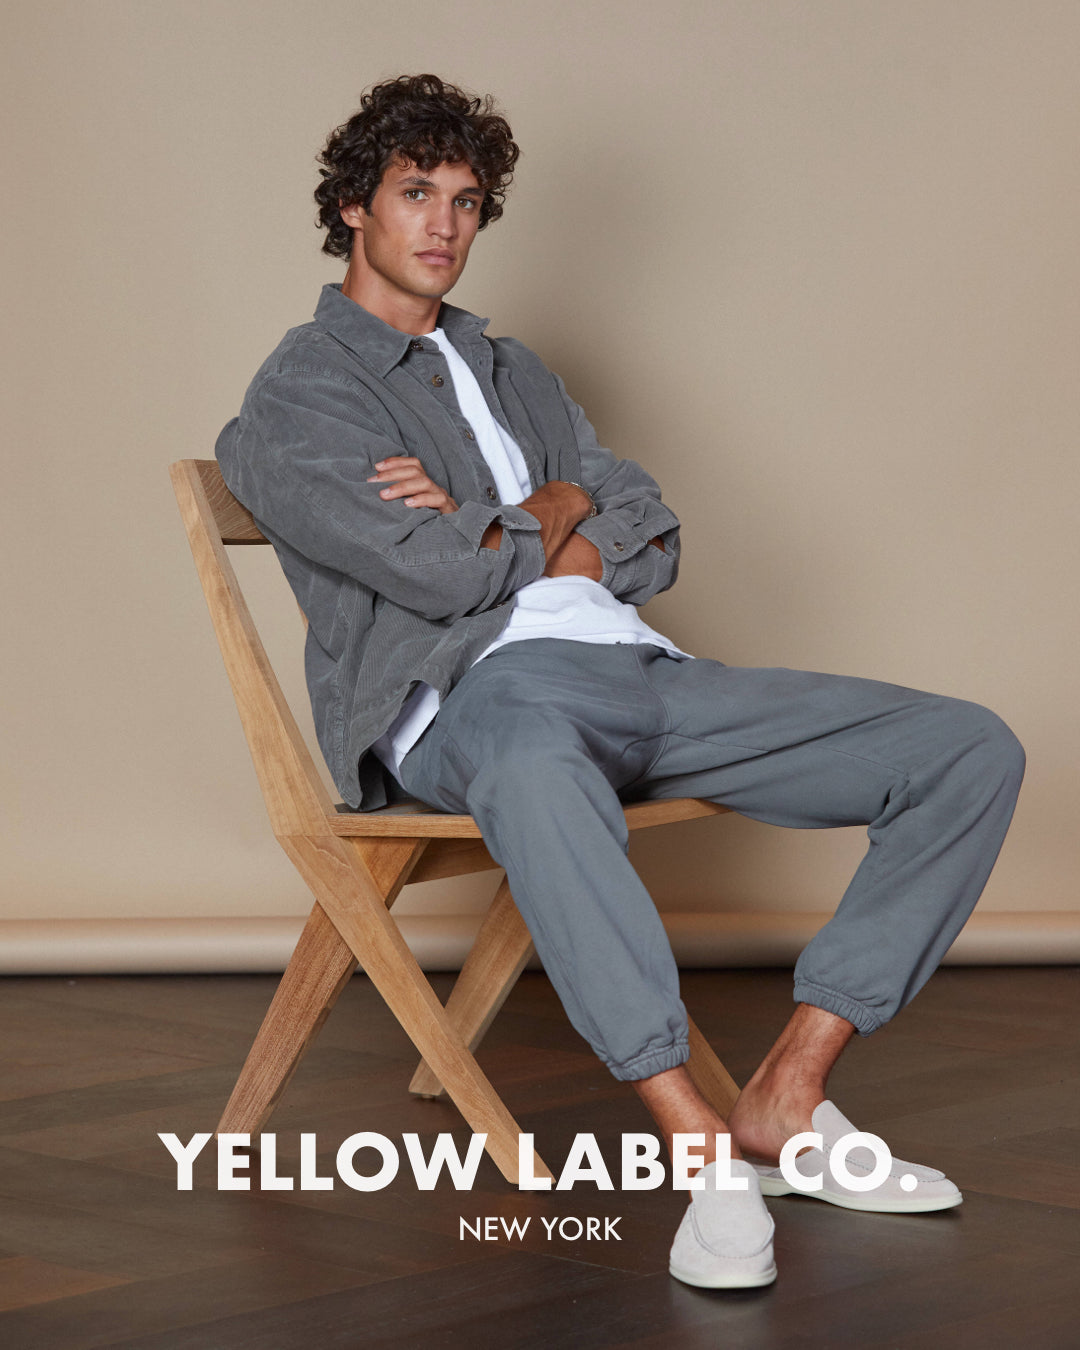 Yellow Label Co LLC